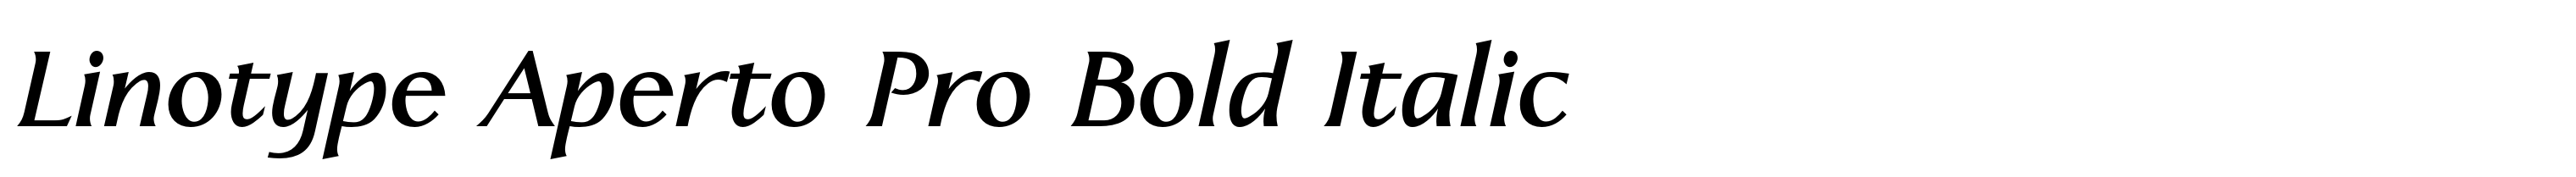 Linotype Aperto Pro Bold Italic